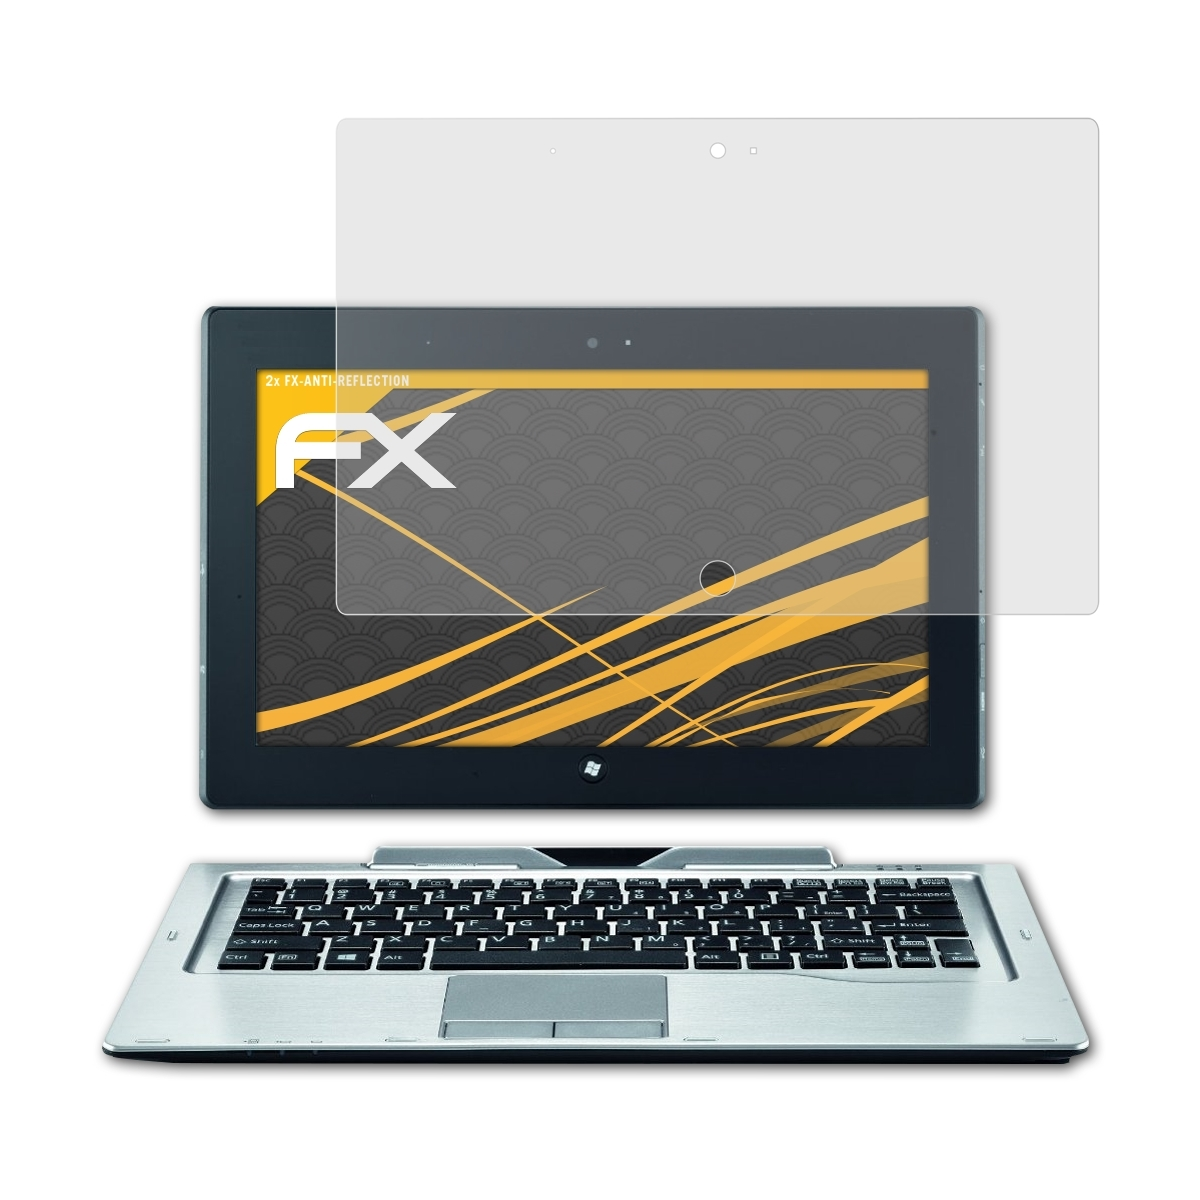 ATFOLIX 2x FX-Antireflex Displayschutz(für Stylistic Fujitsu Q702)